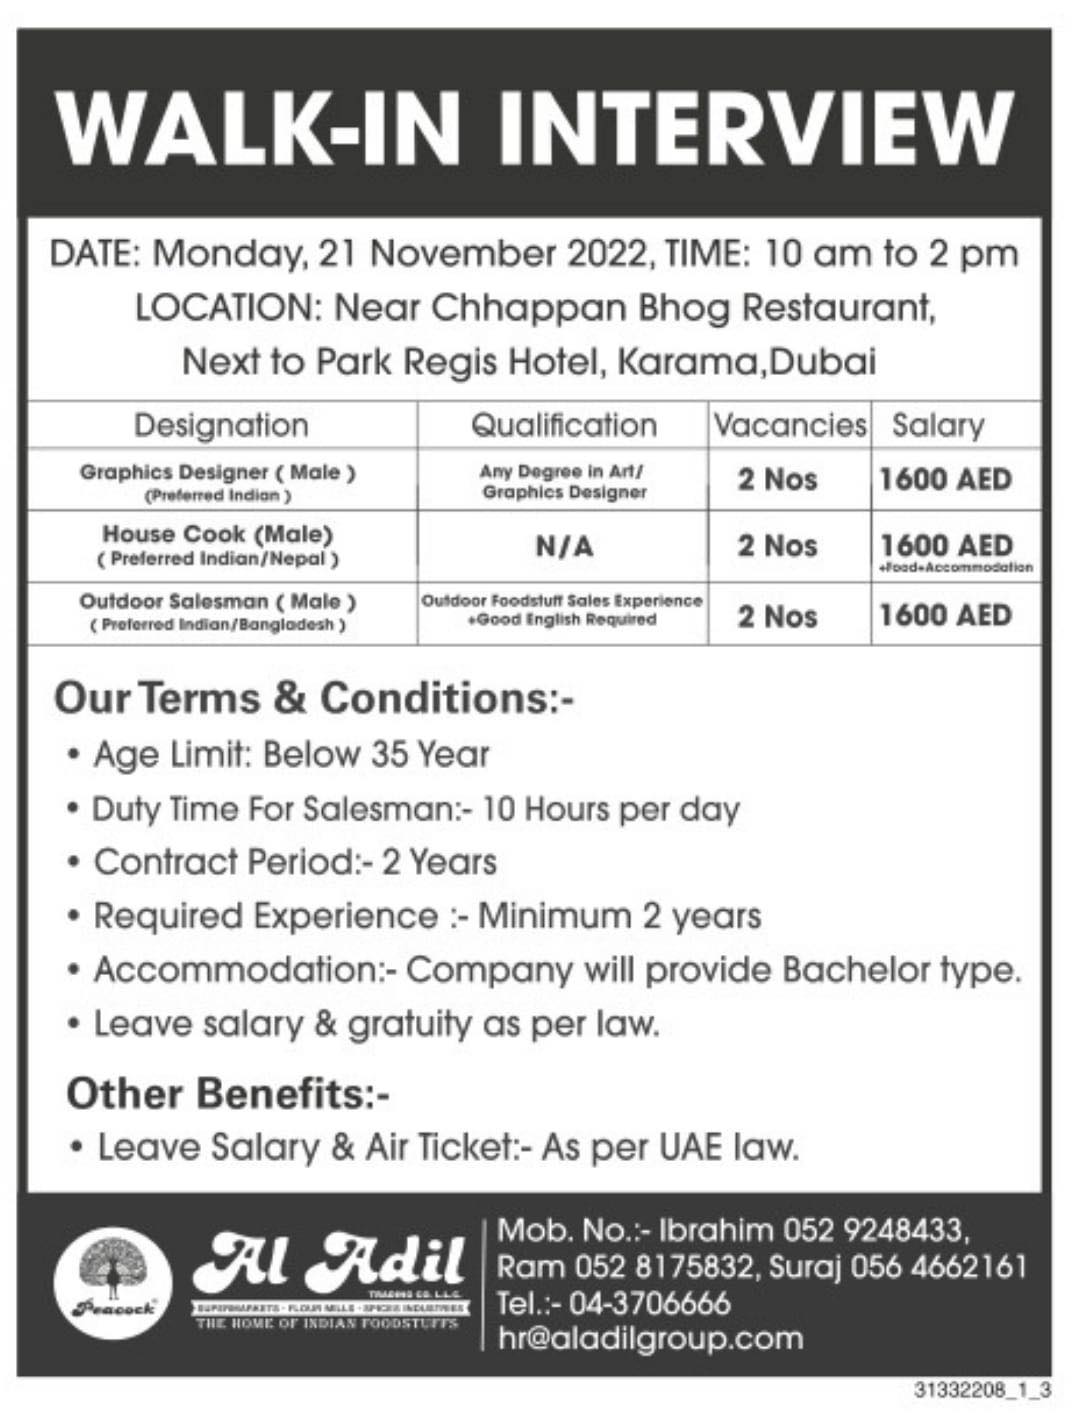 اعلان وظائف خاليه بالامارات ودبى بتاريخ 21/11/2022..Jobs in Dubai and the Emirates